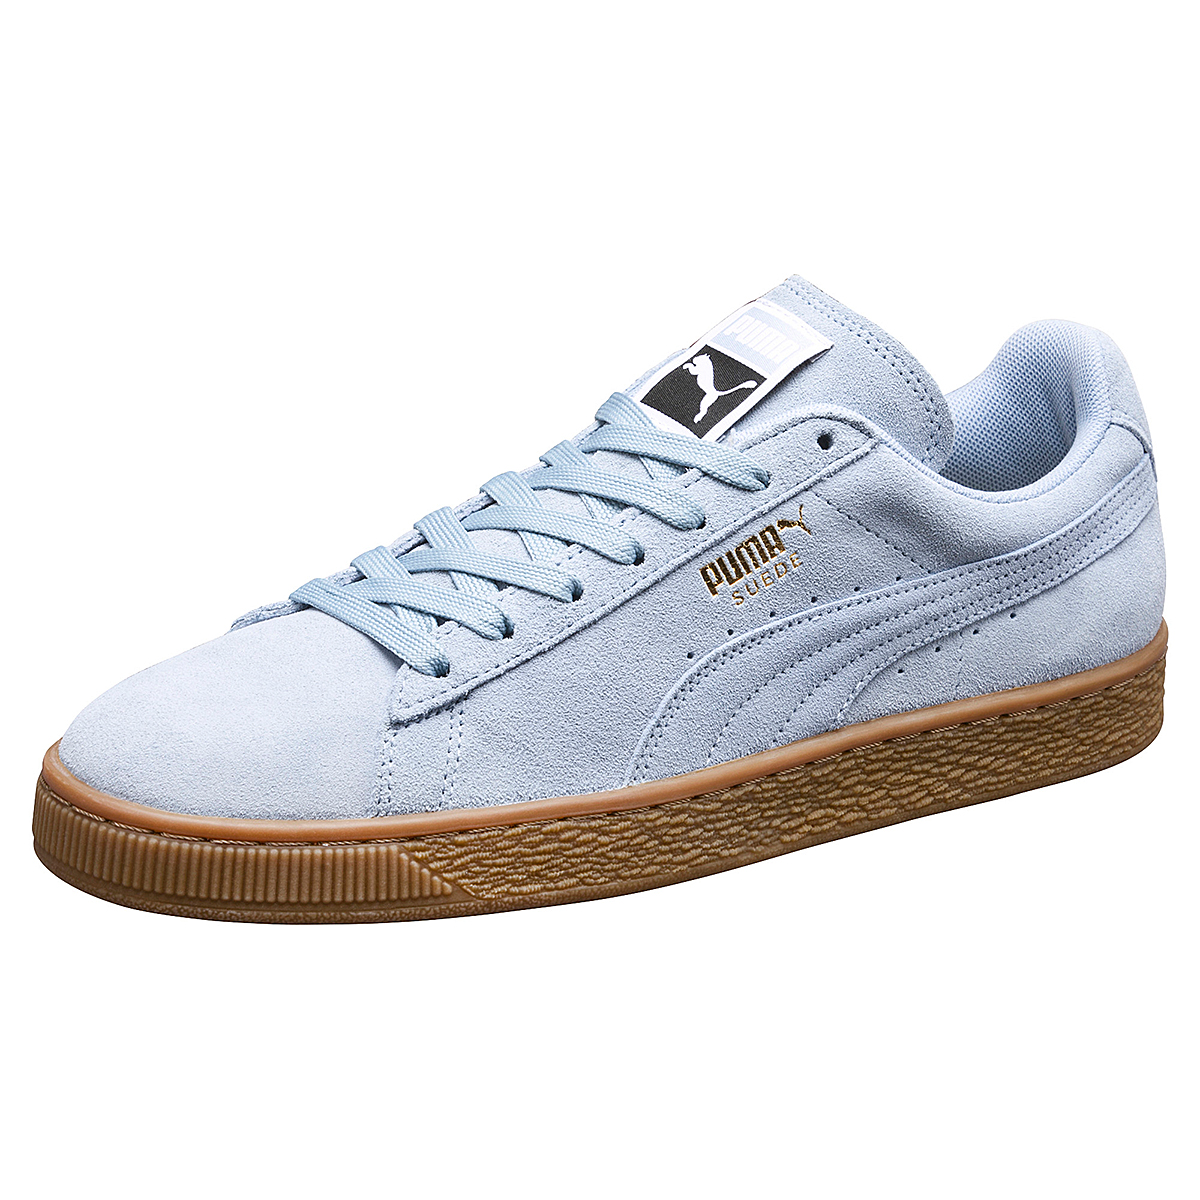 Puma Suede Classic Gum Unisex Sneaker Schuhe Leder blau 366489 01